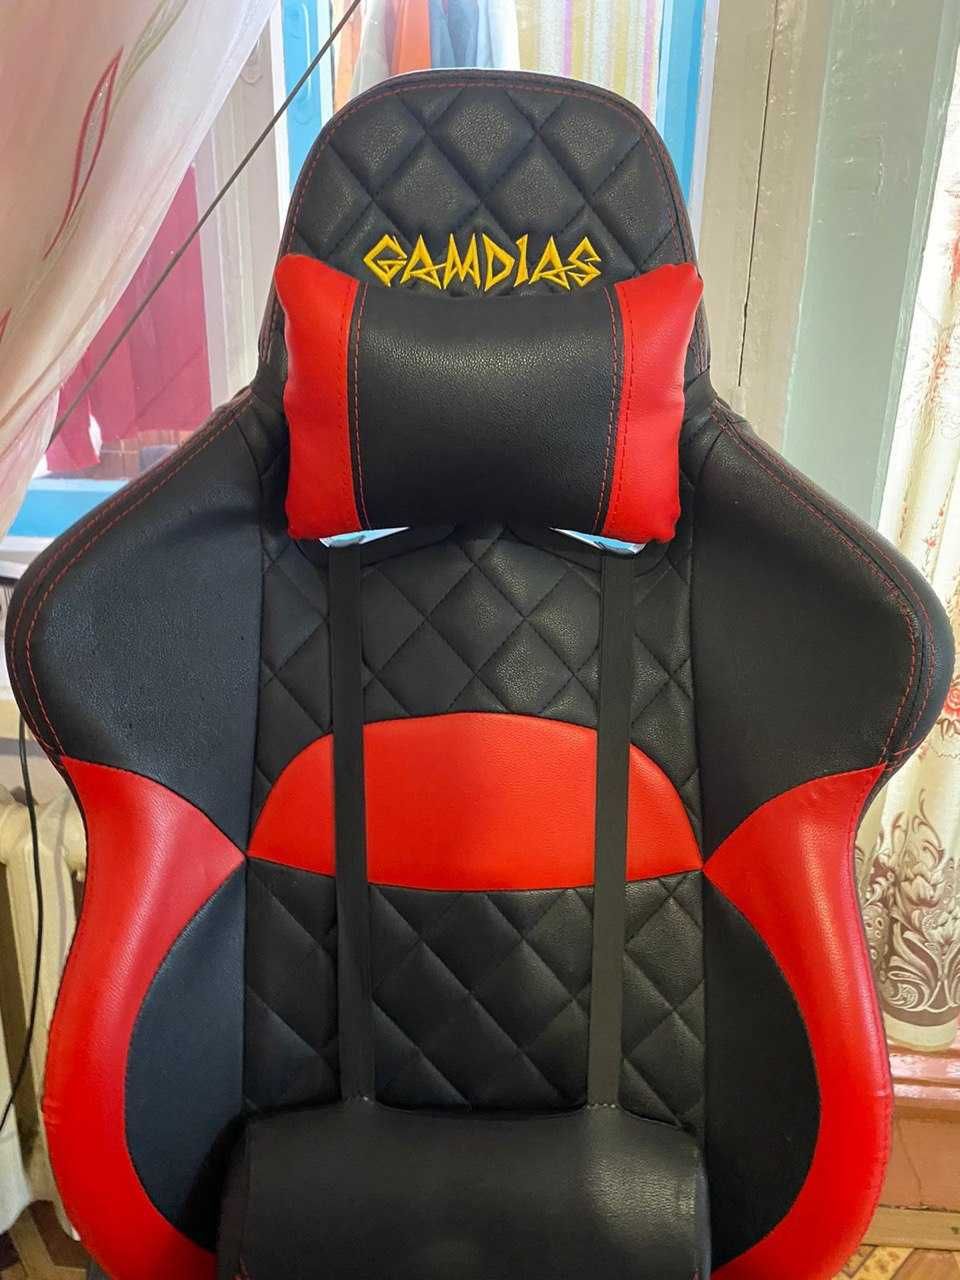 Gamdias Zelus E1 Gaming Chair